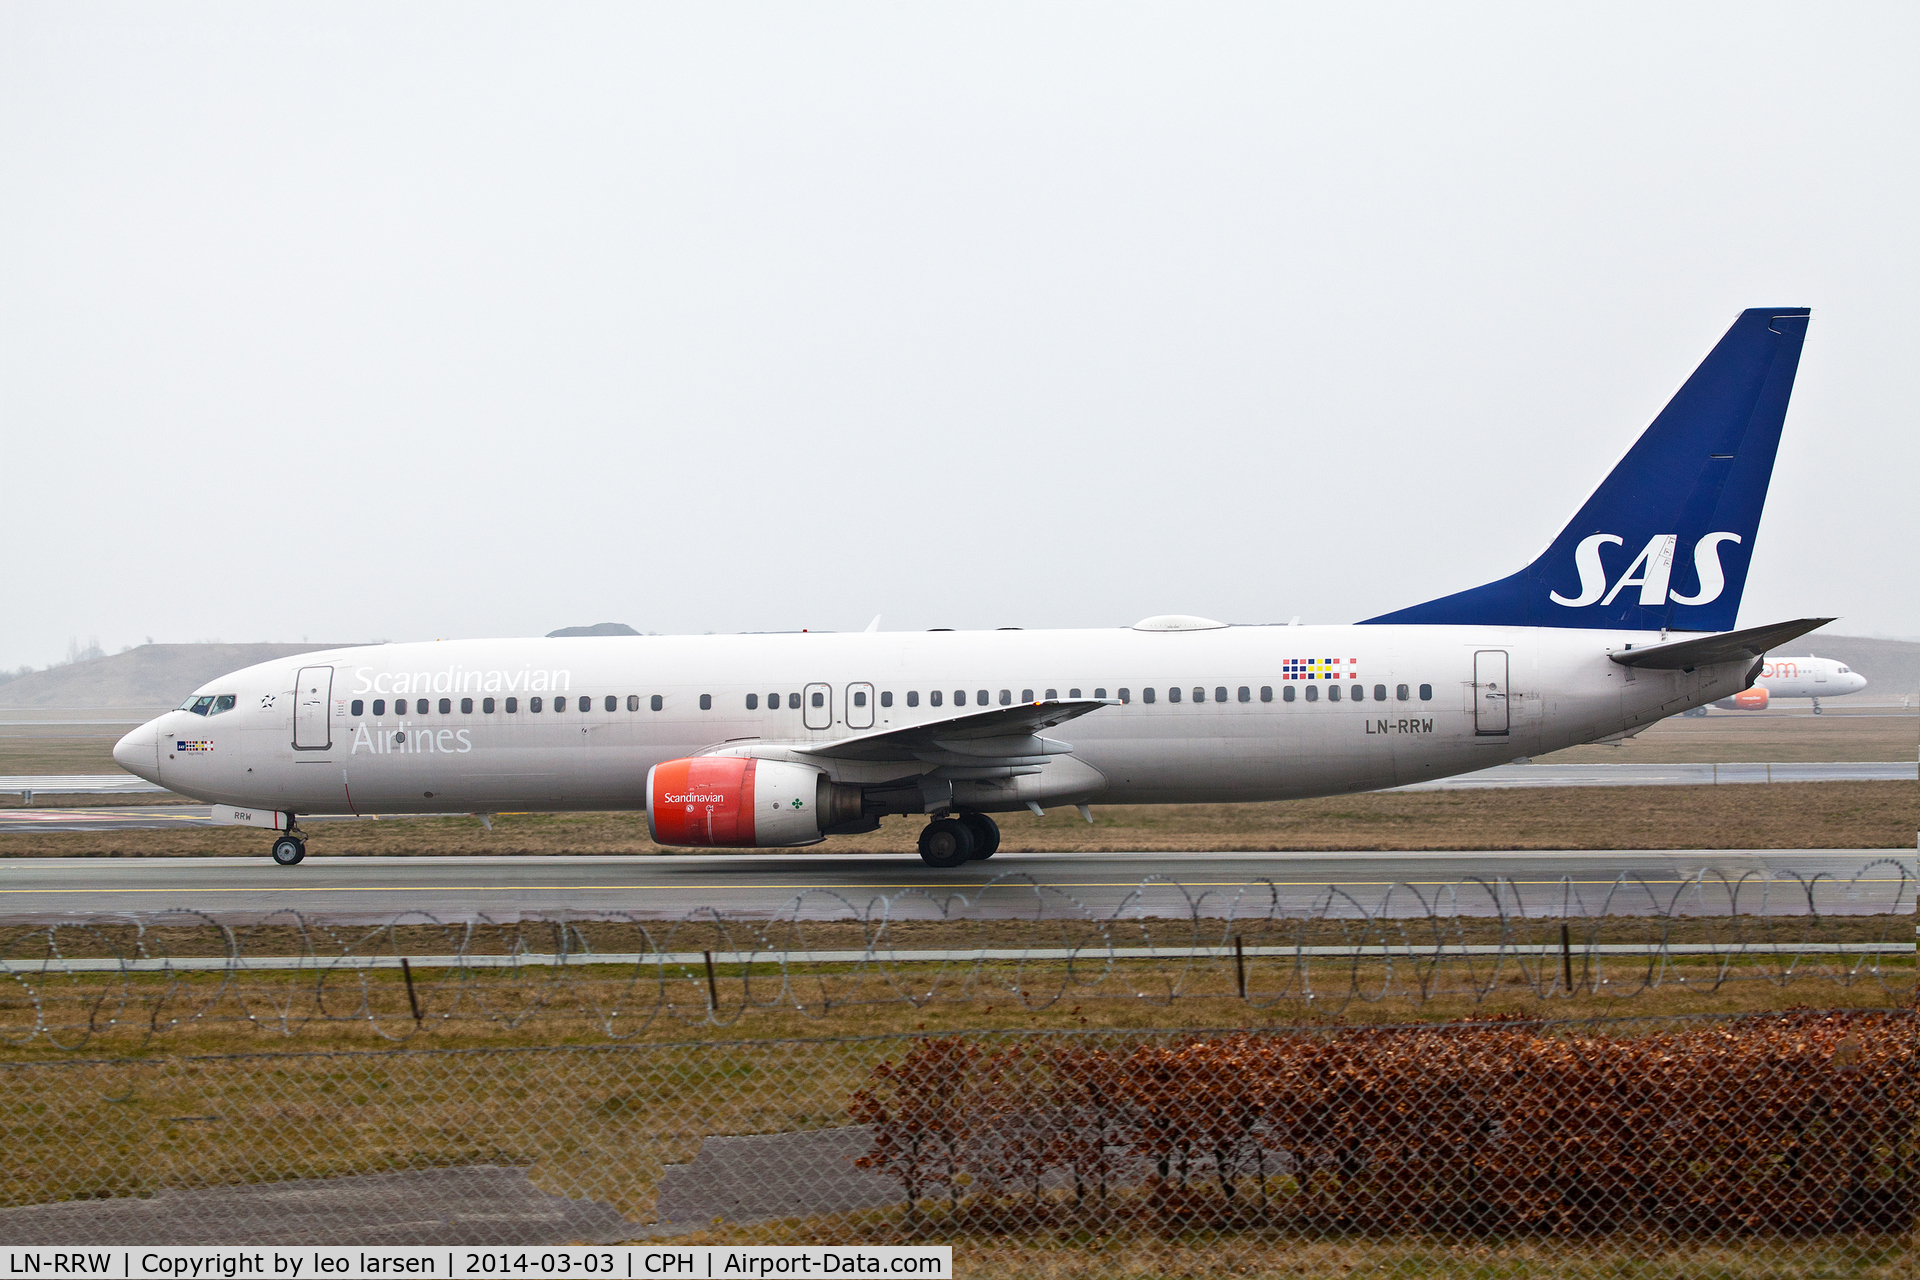 LN-RRW, 2004 Boeing 737-883 C/N 32277, Copenhagen 3.3.2014